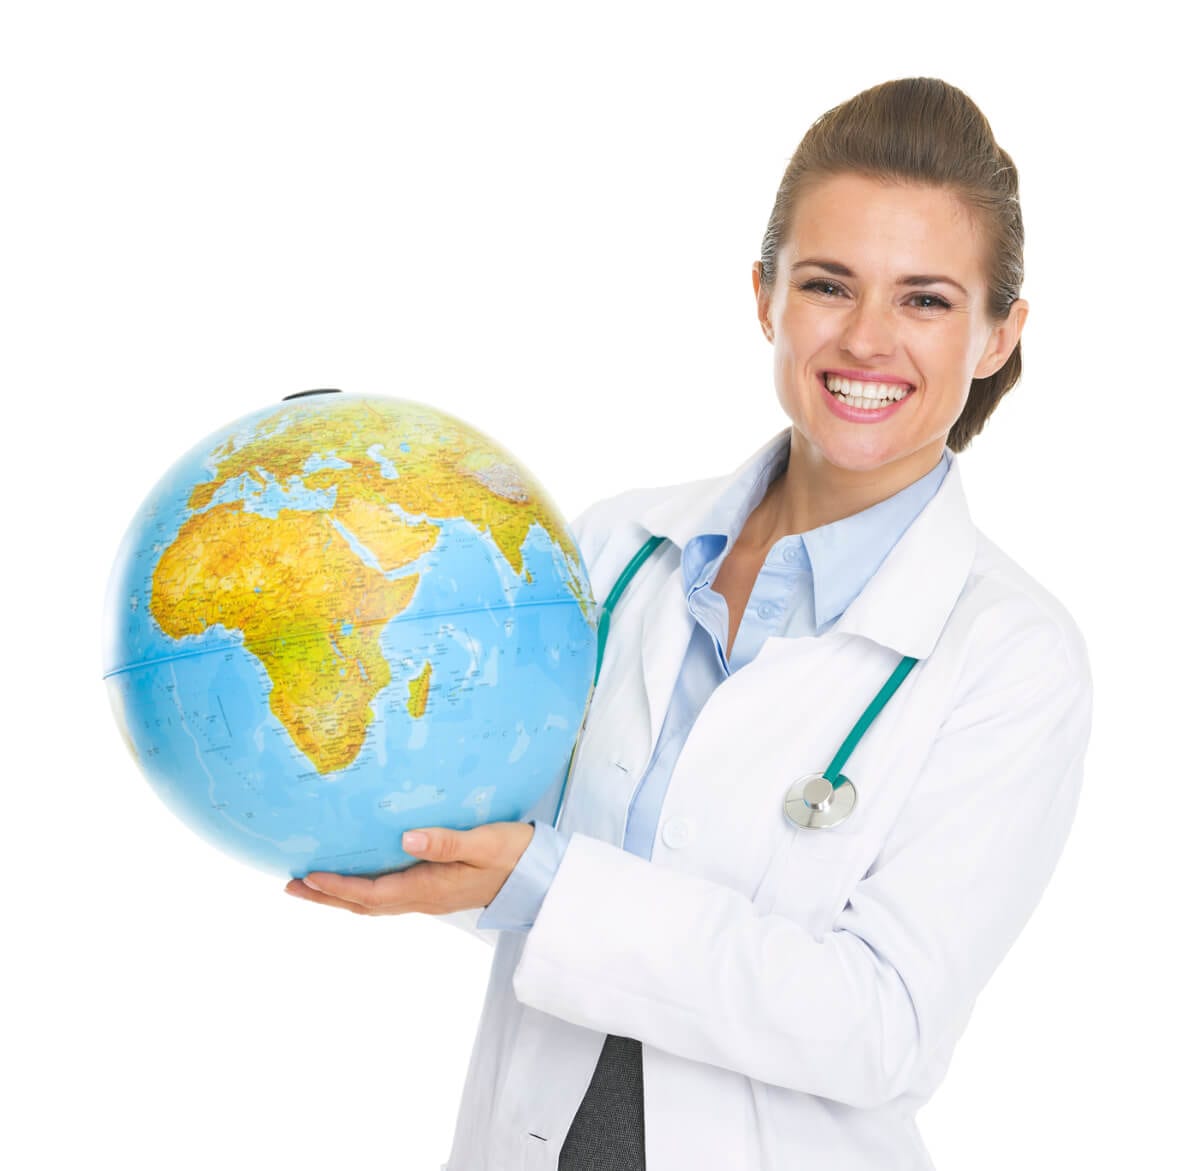 Travel Medical Insurance - Health Plans for Travelers